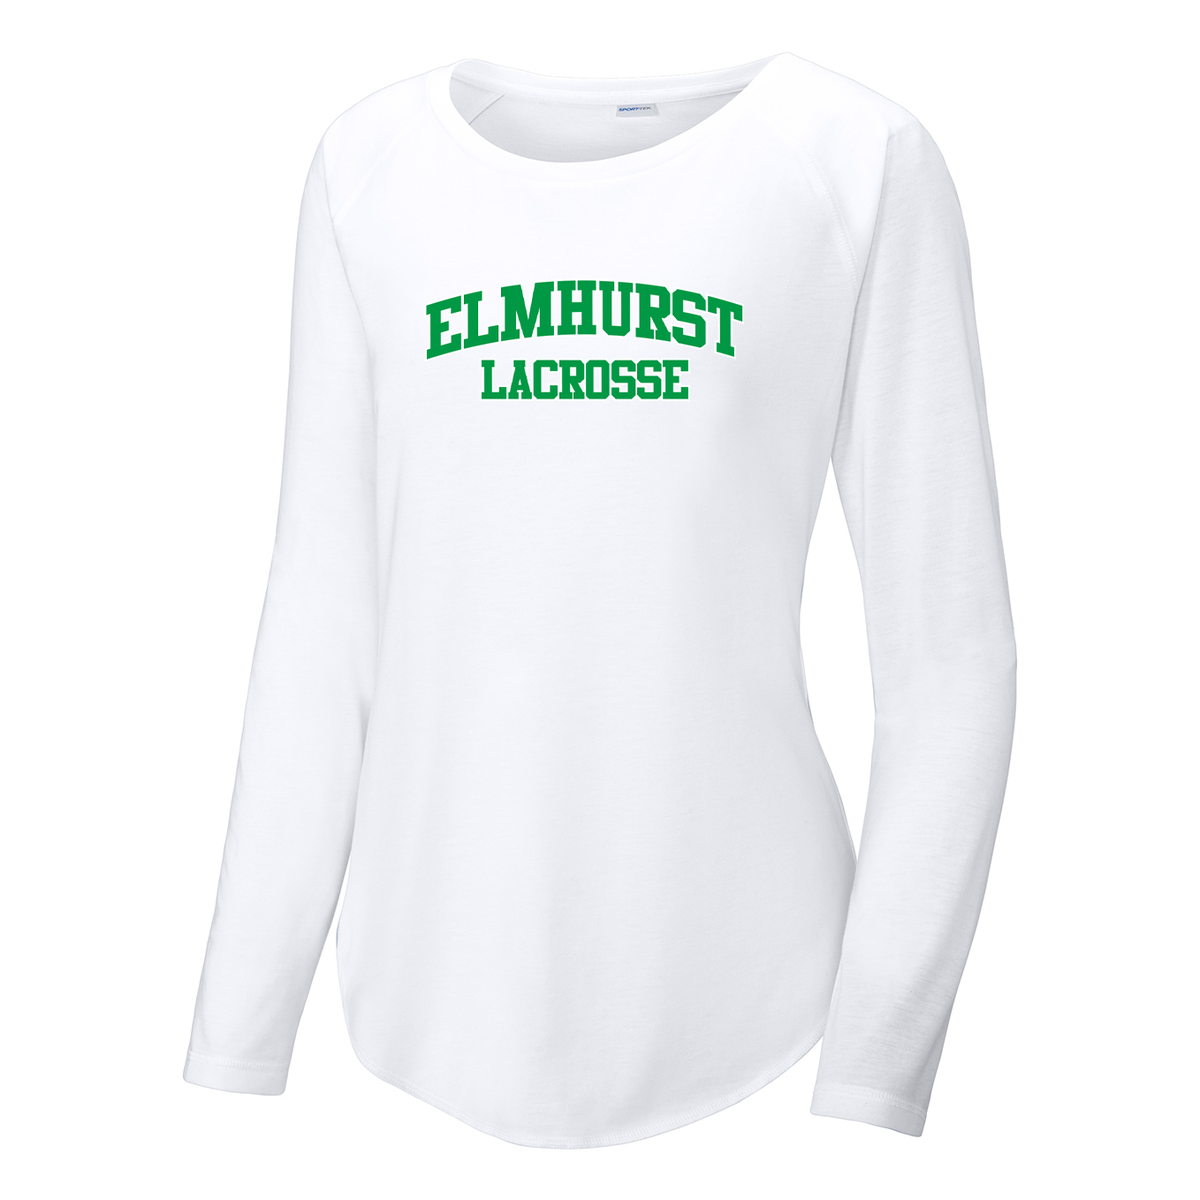 Elmhurst Lacrosse Women's Raglan Long Sleeve CottonTouch